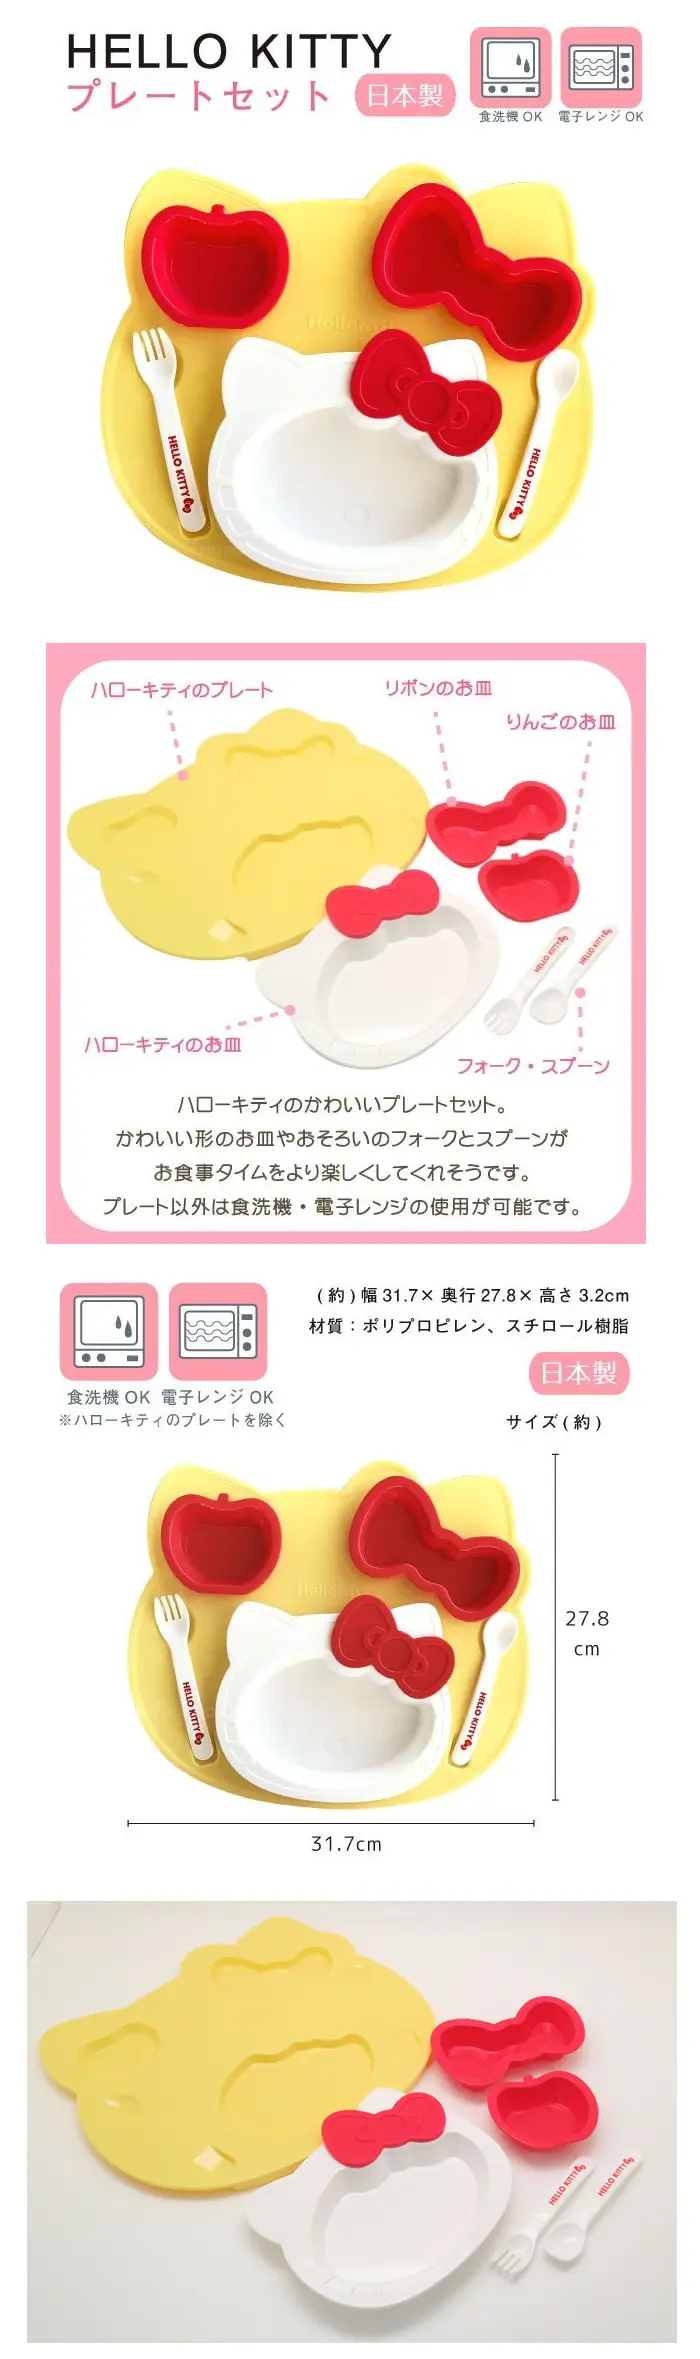 Hello Kitty 婴幼儿餐具套装-6件装